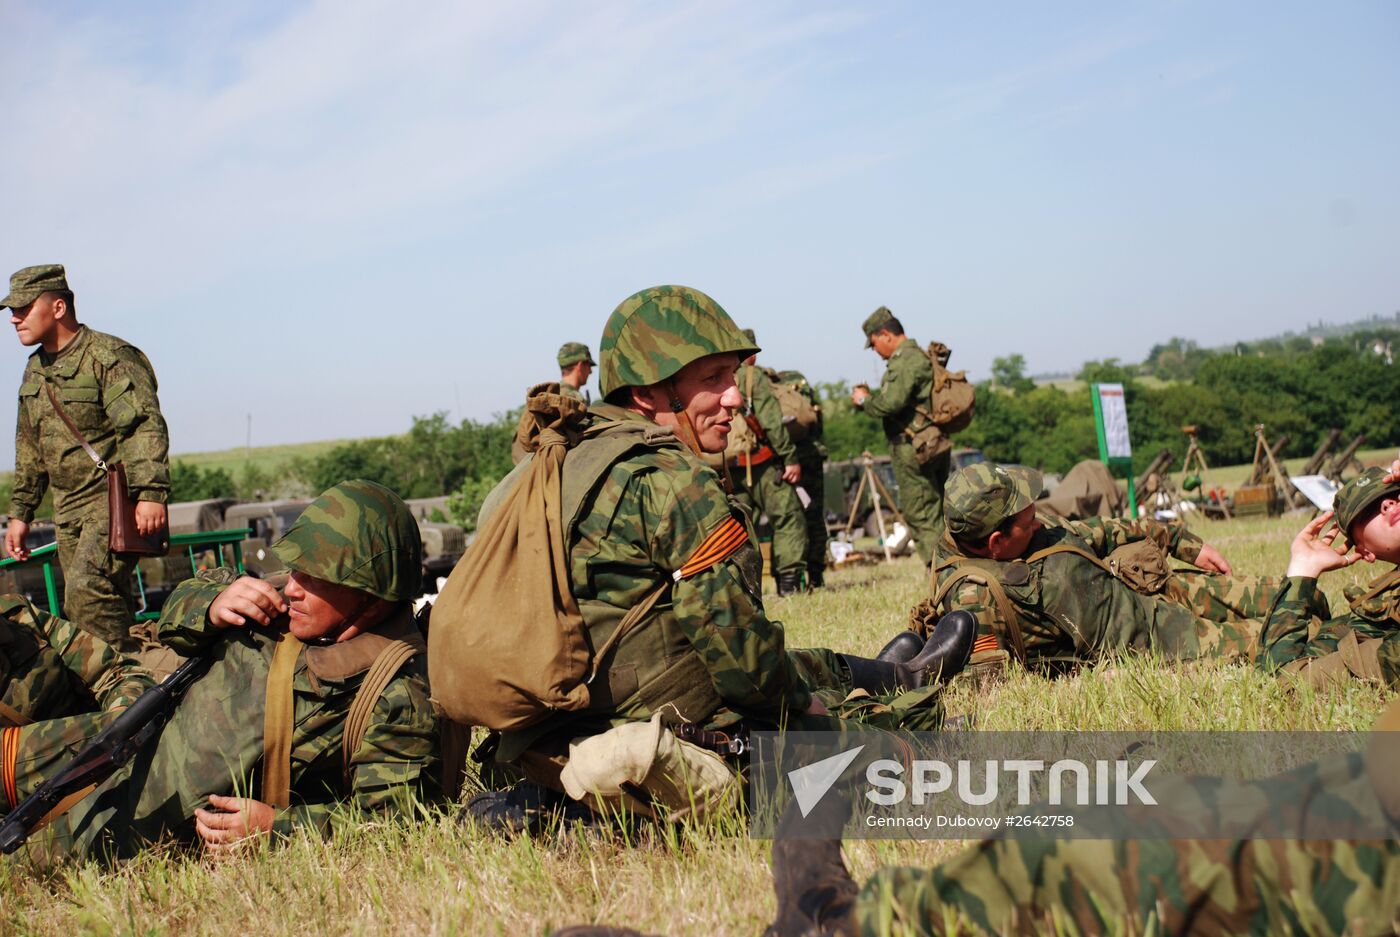 Donetsk People's Republic self-defense forces in Starobeshevsky District, Donetsk Region